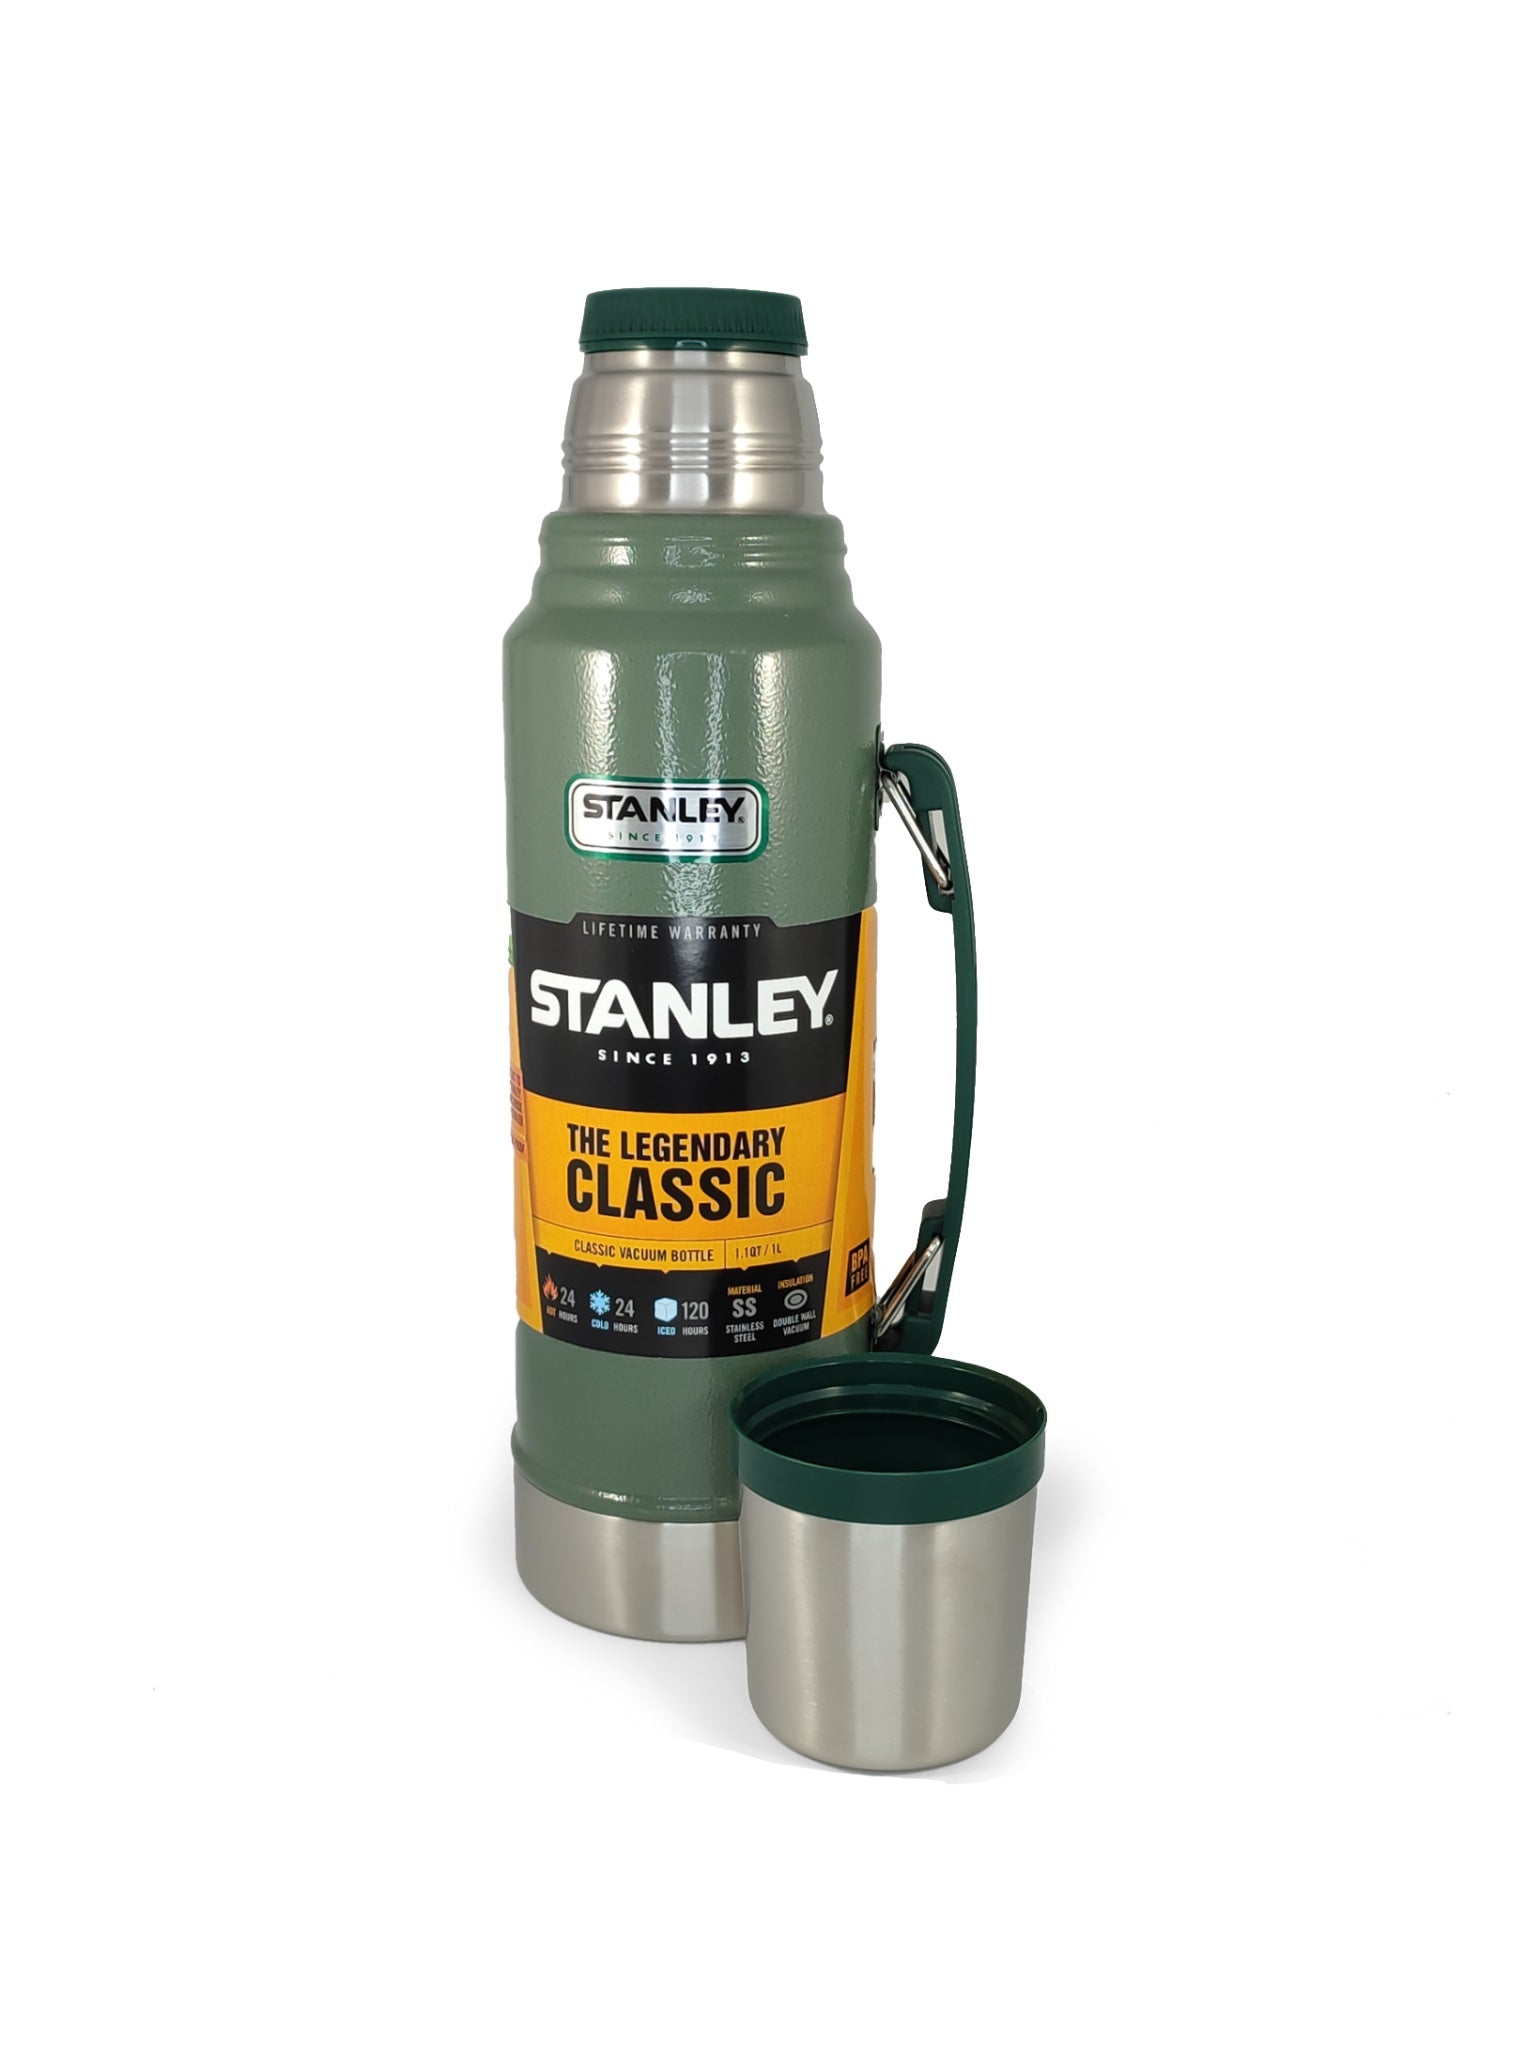 Termo Stanley 1L - Classic Legendary (Varios colores) - La Boutique del Mate